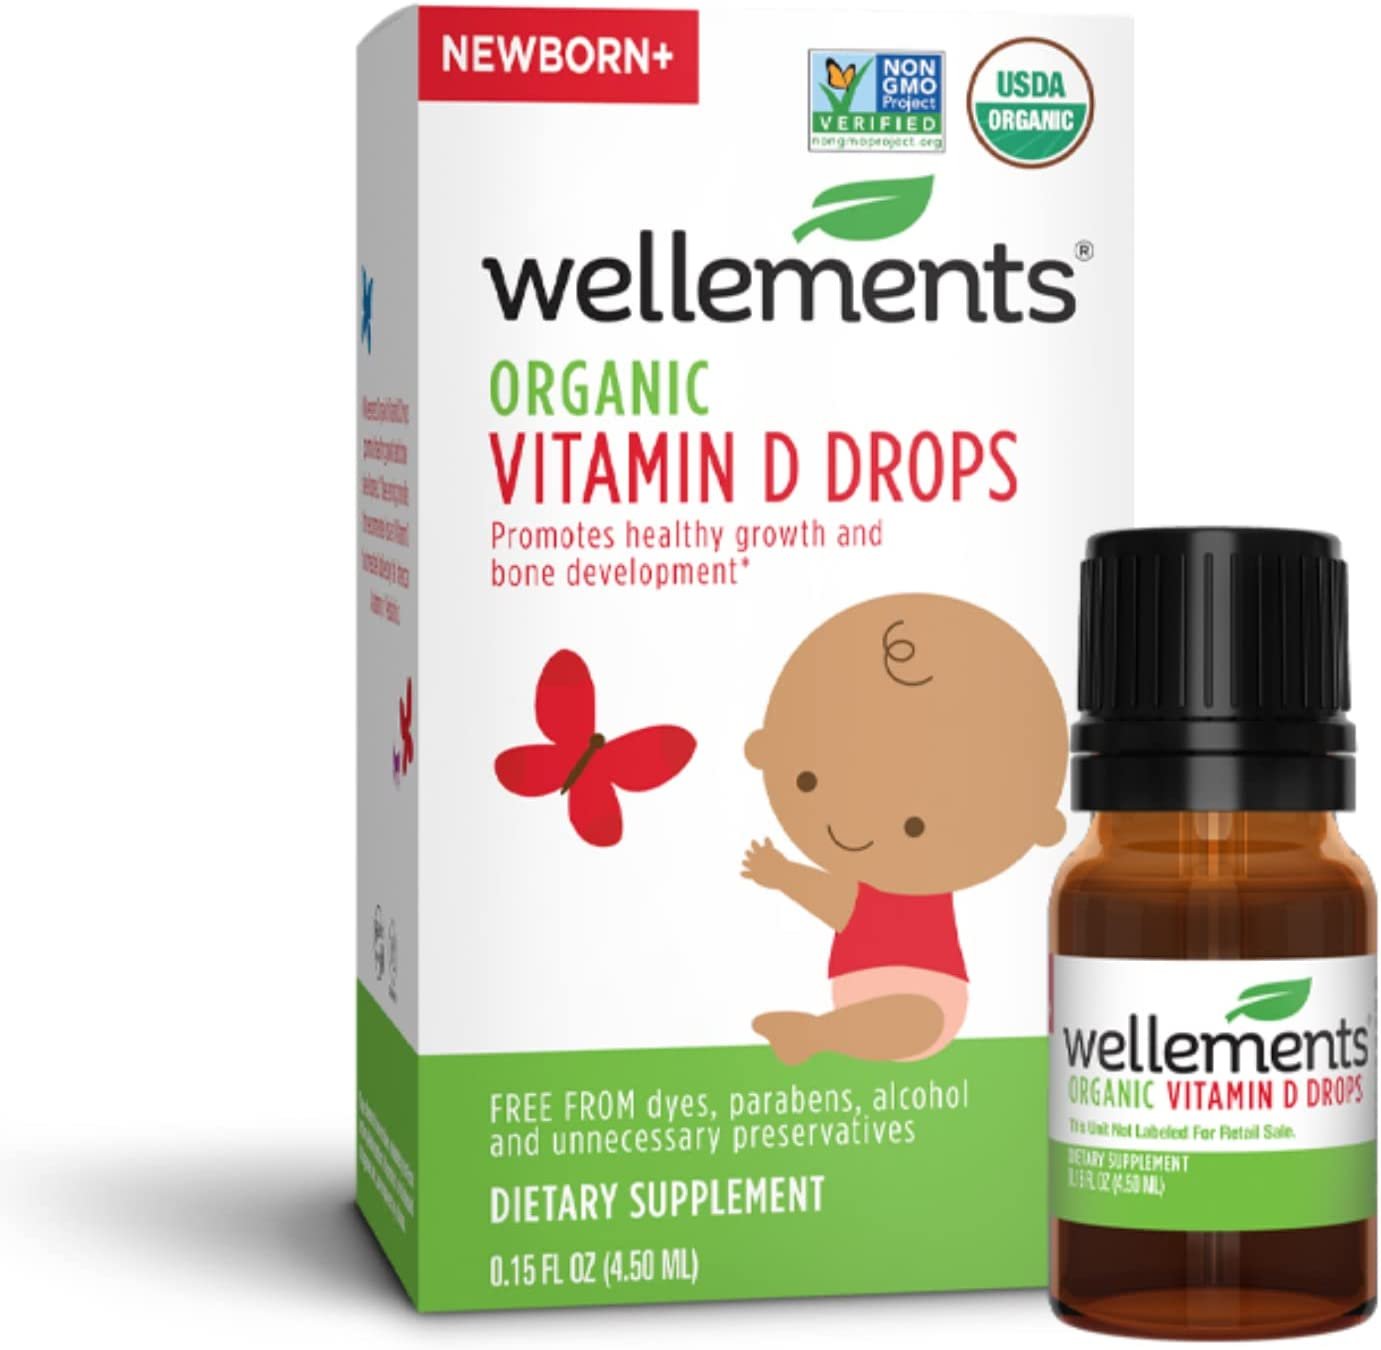 Wellements Certified Organic Baby Vitamin D Drops*